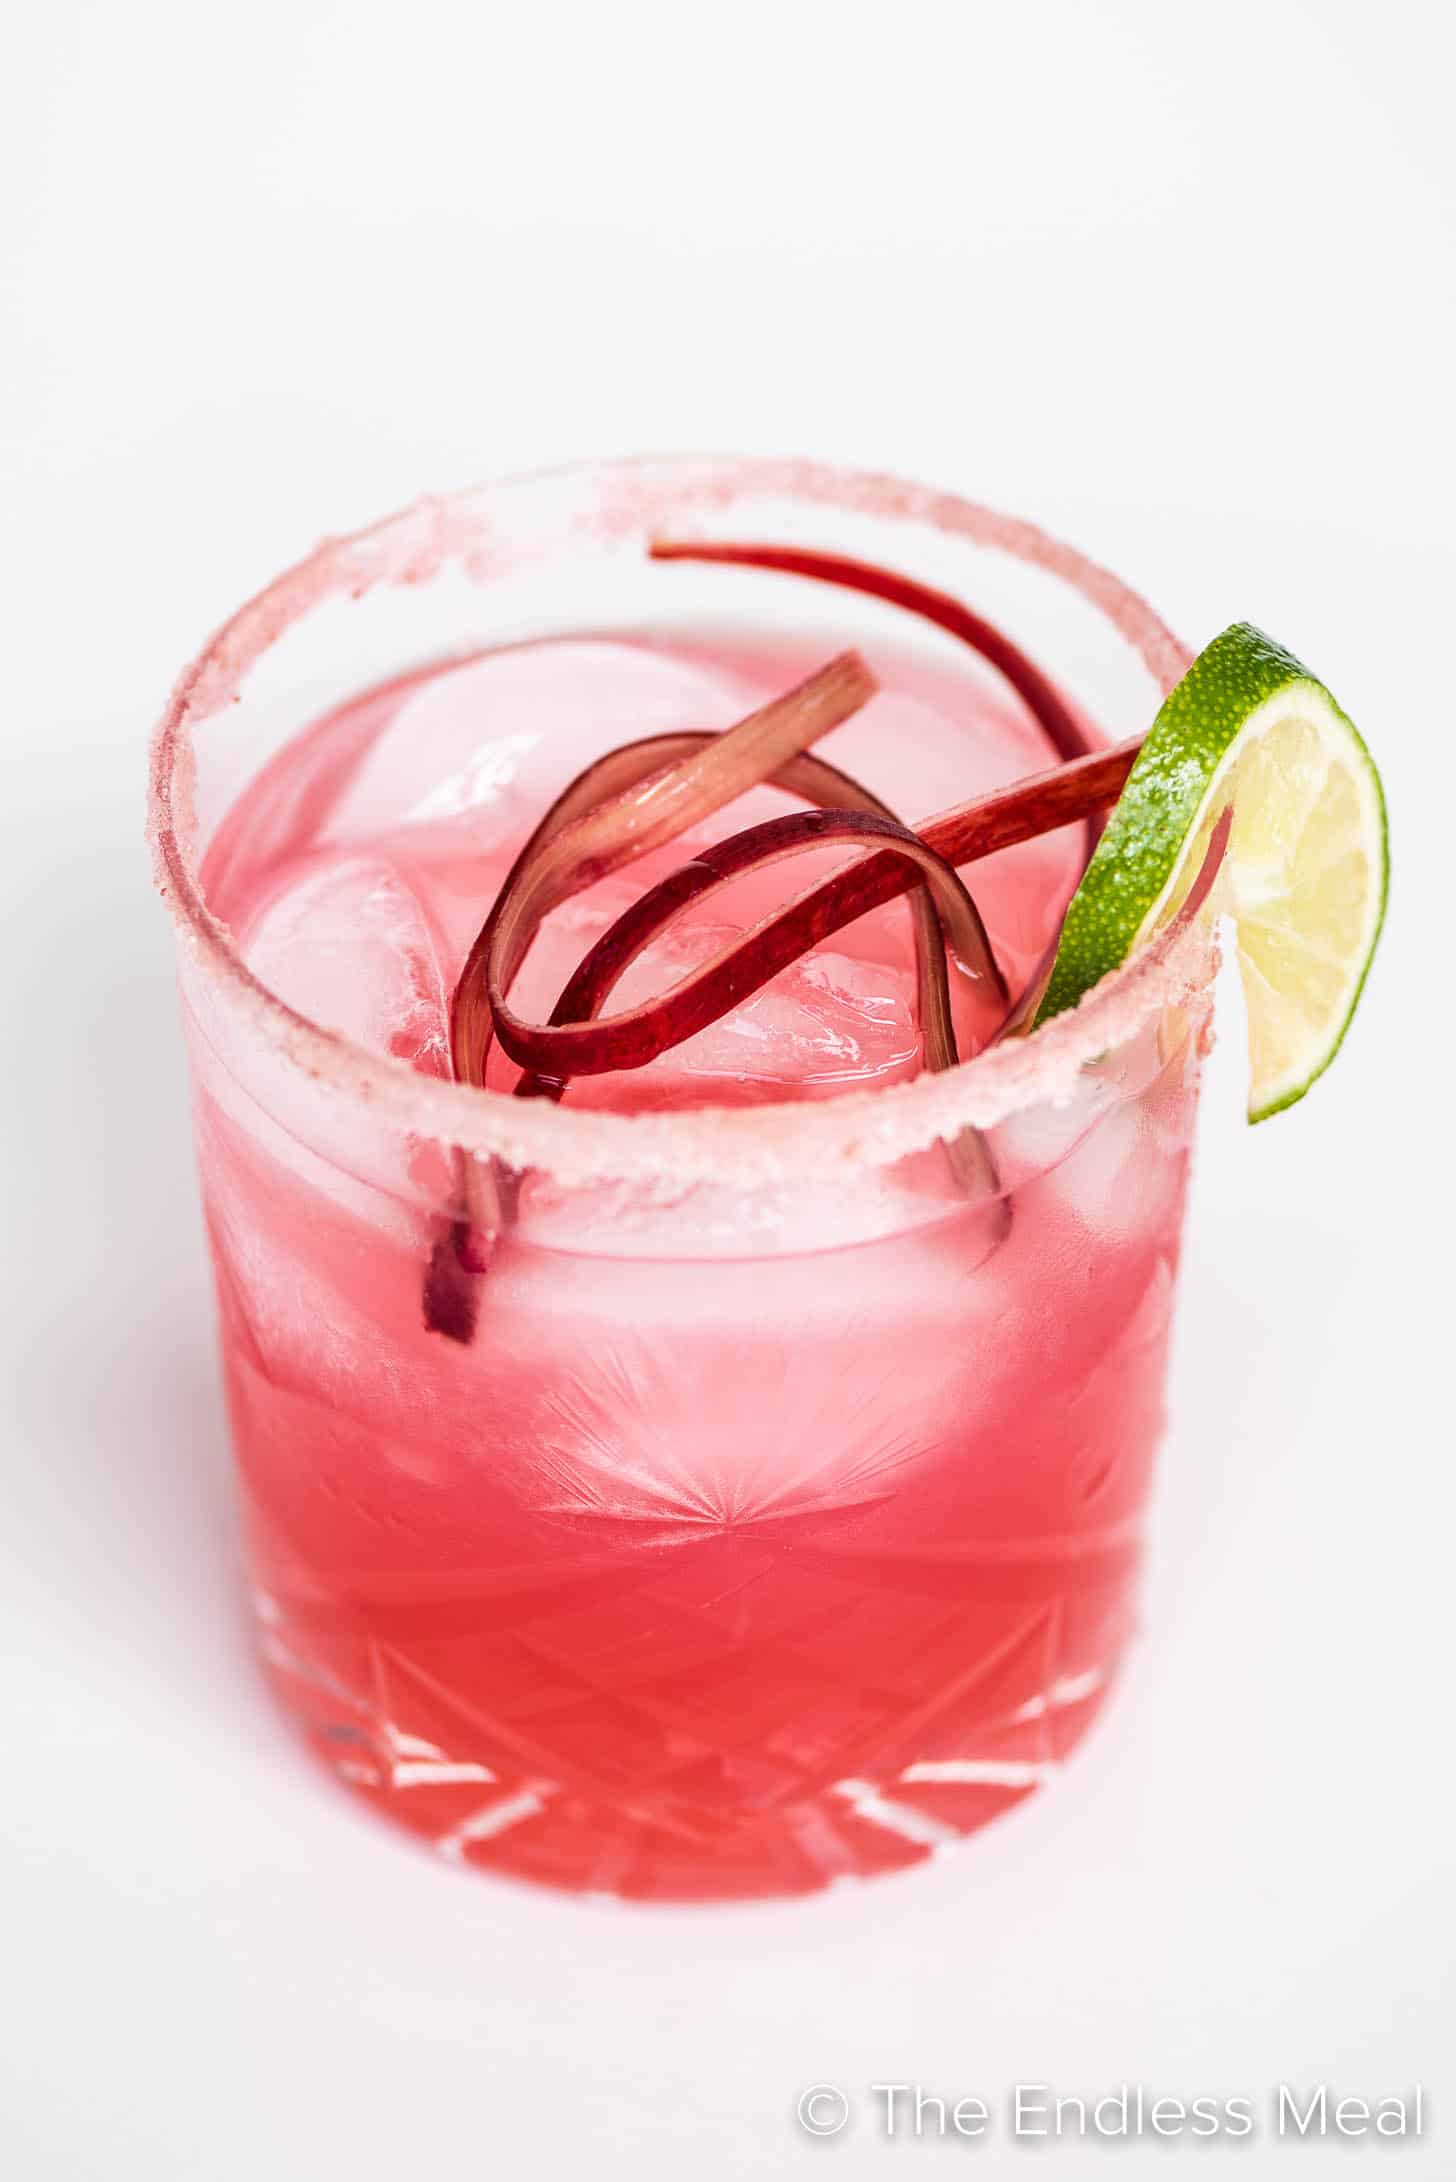 a glass of Rhubarb Margarita